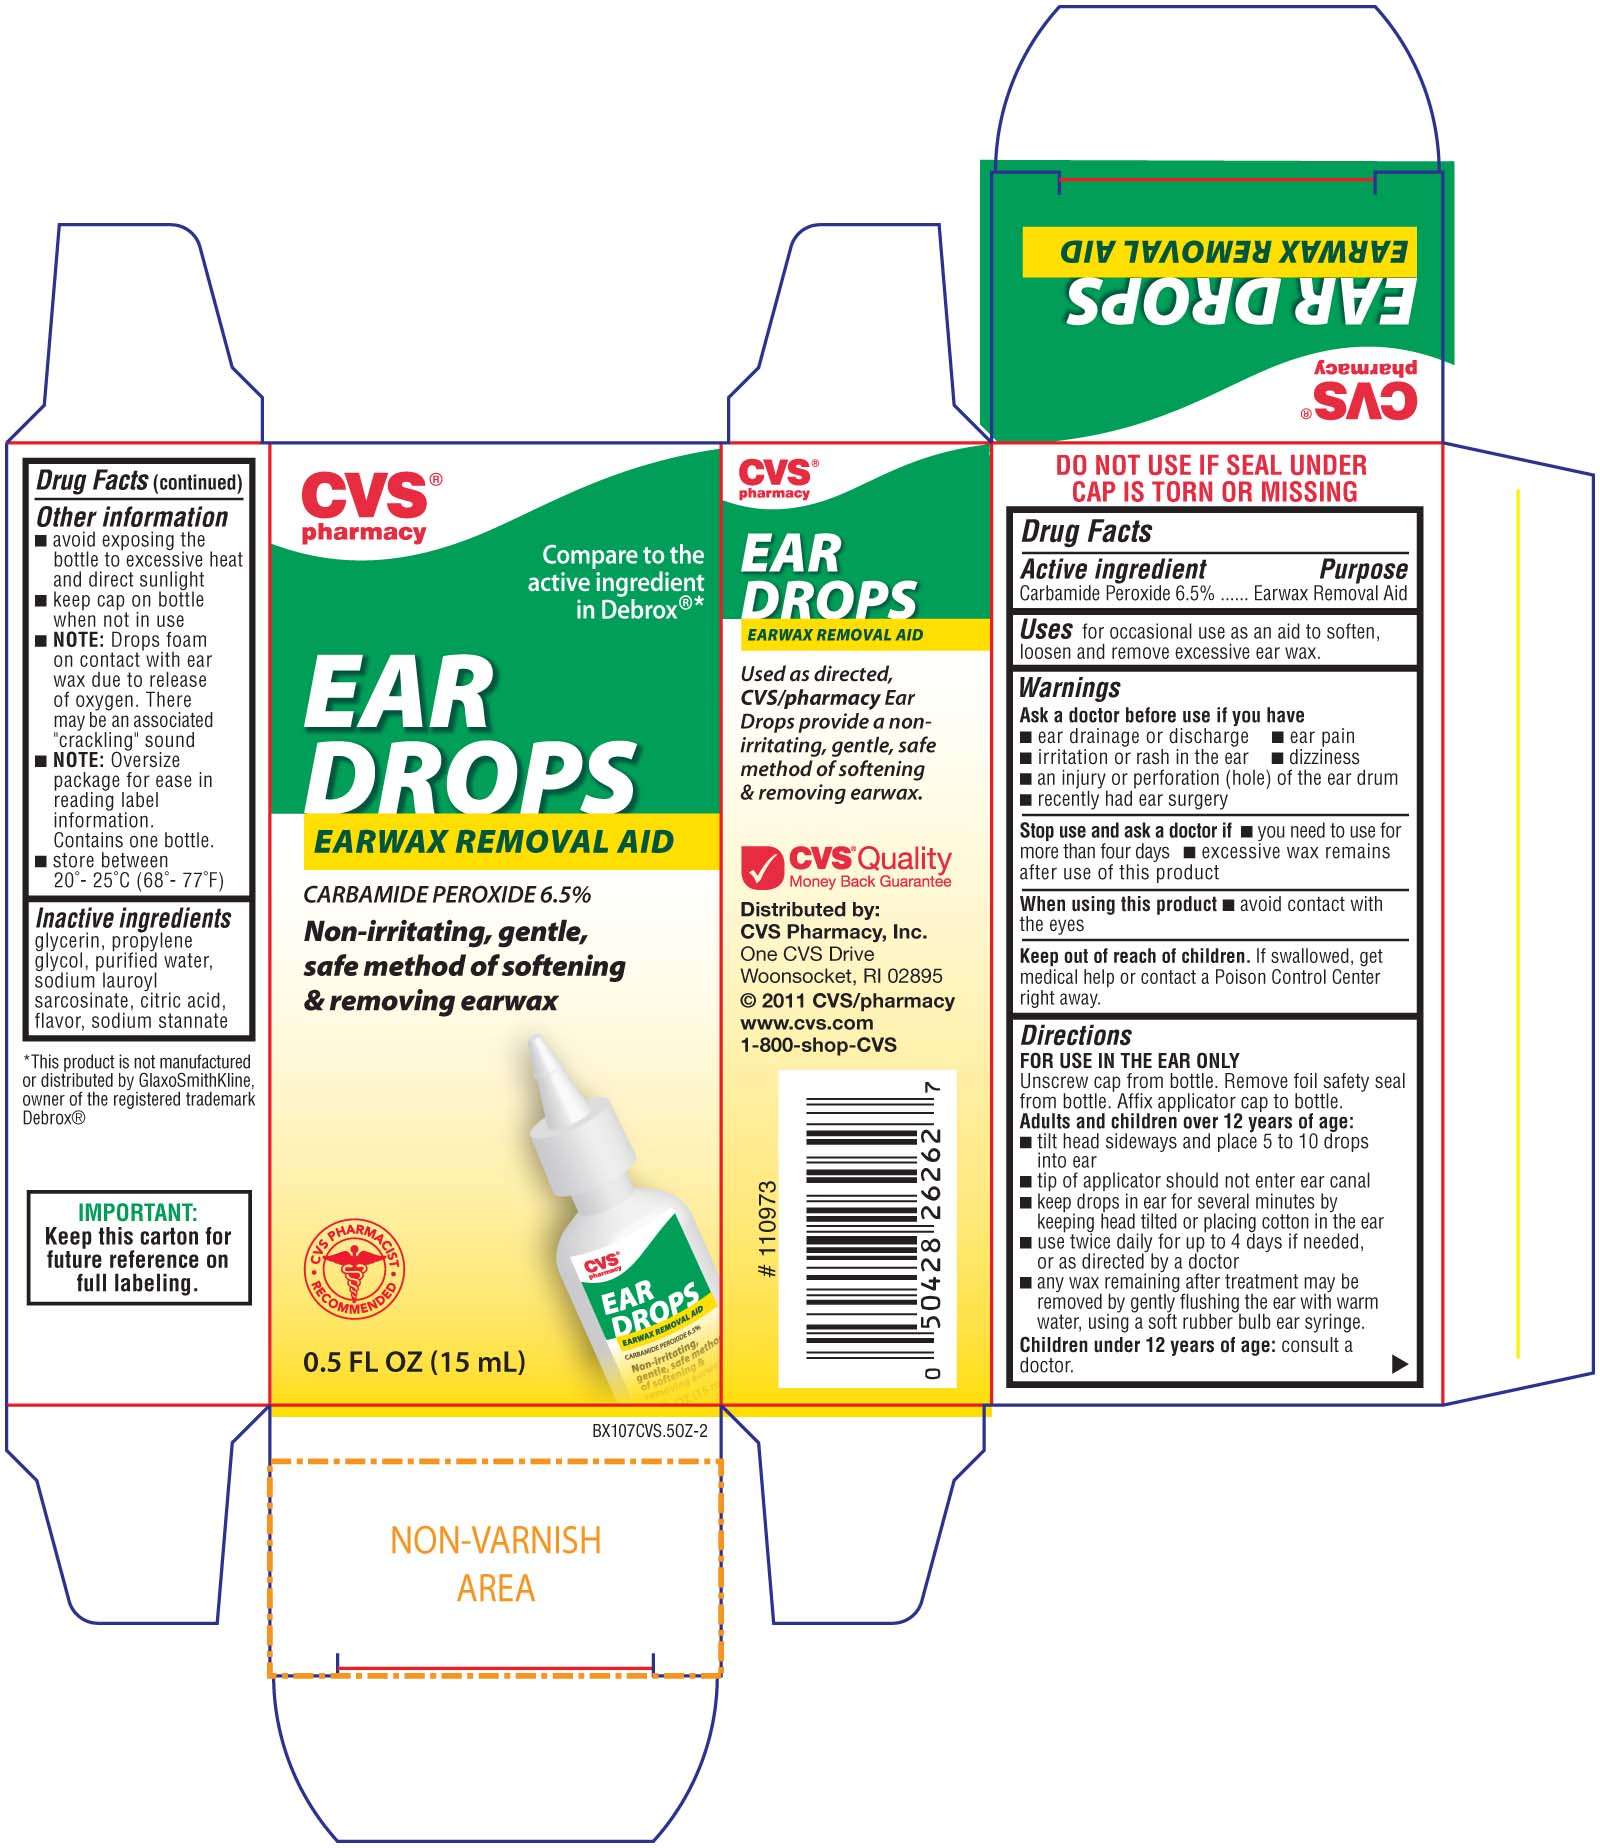 CVS Earwax Removal Aid